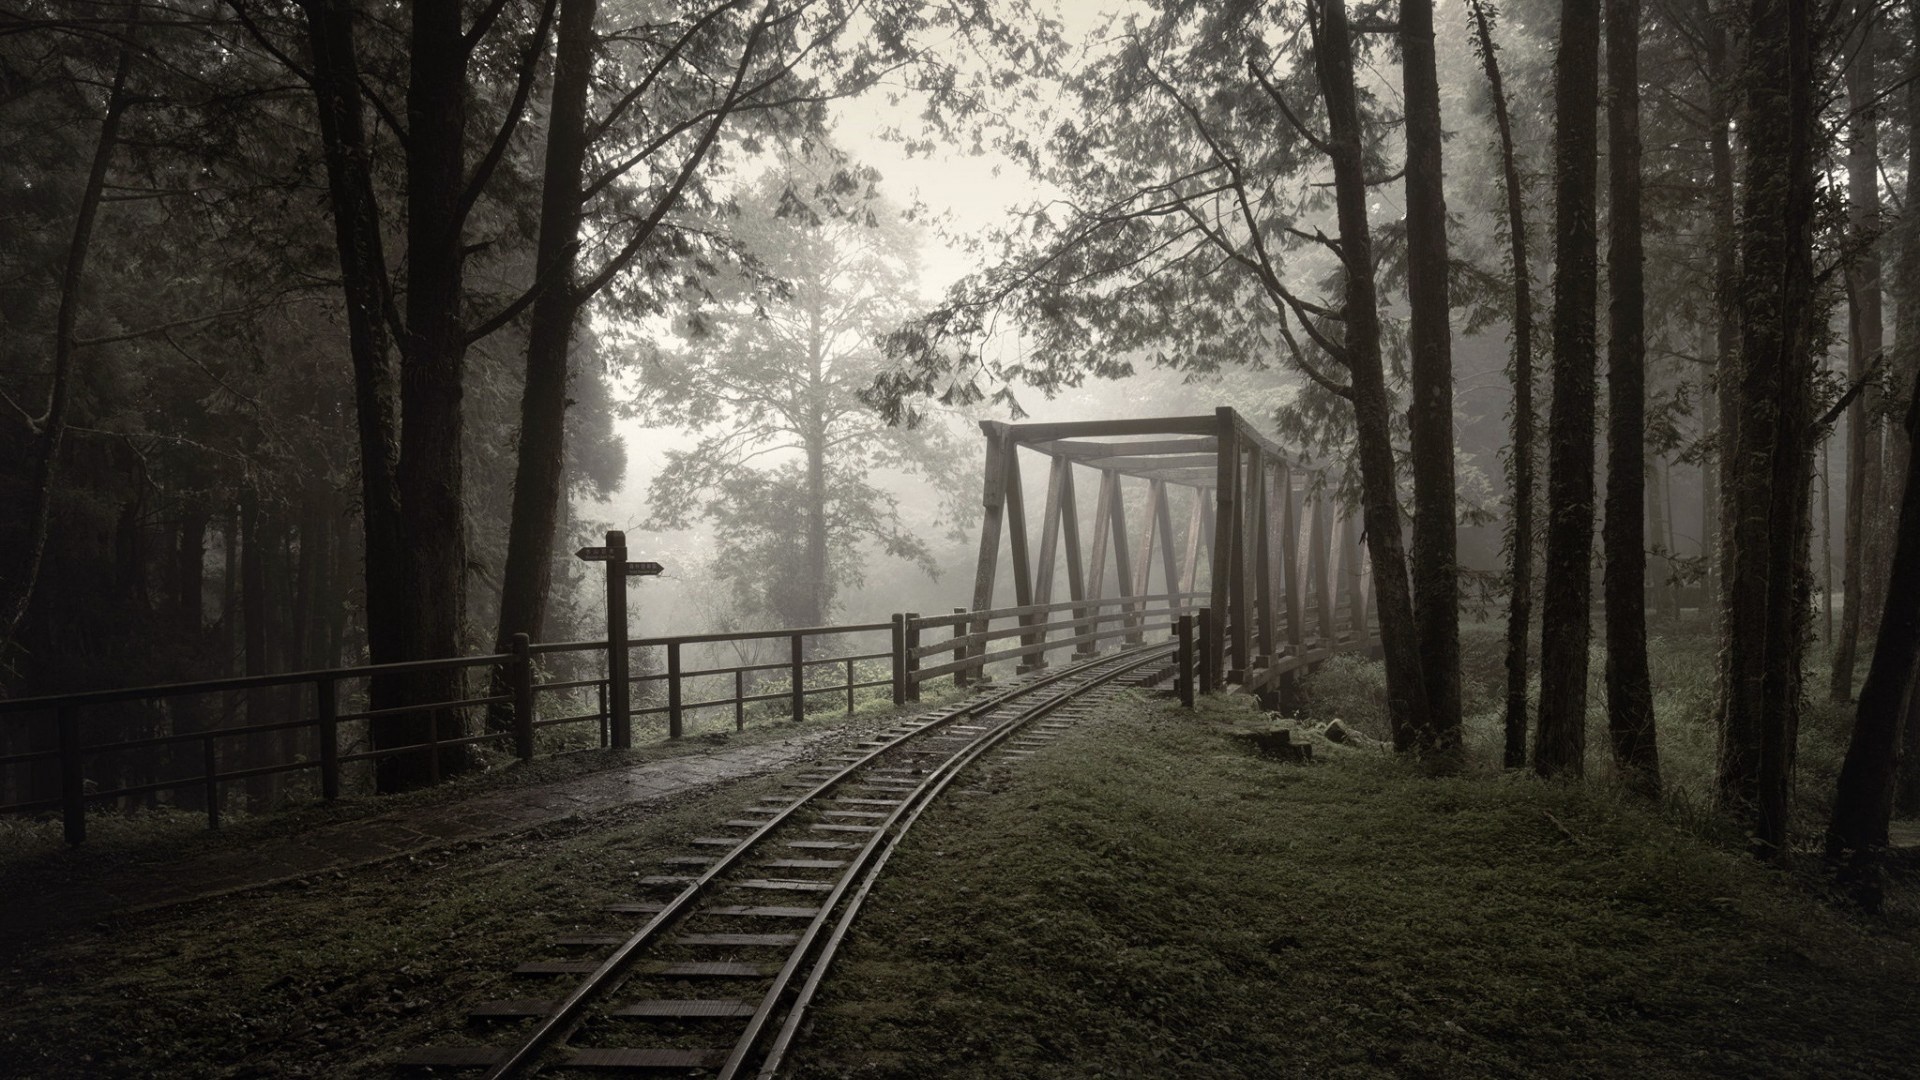 General 1920x1080 architecture bridge railway fence mist nature landscape forest wood grass